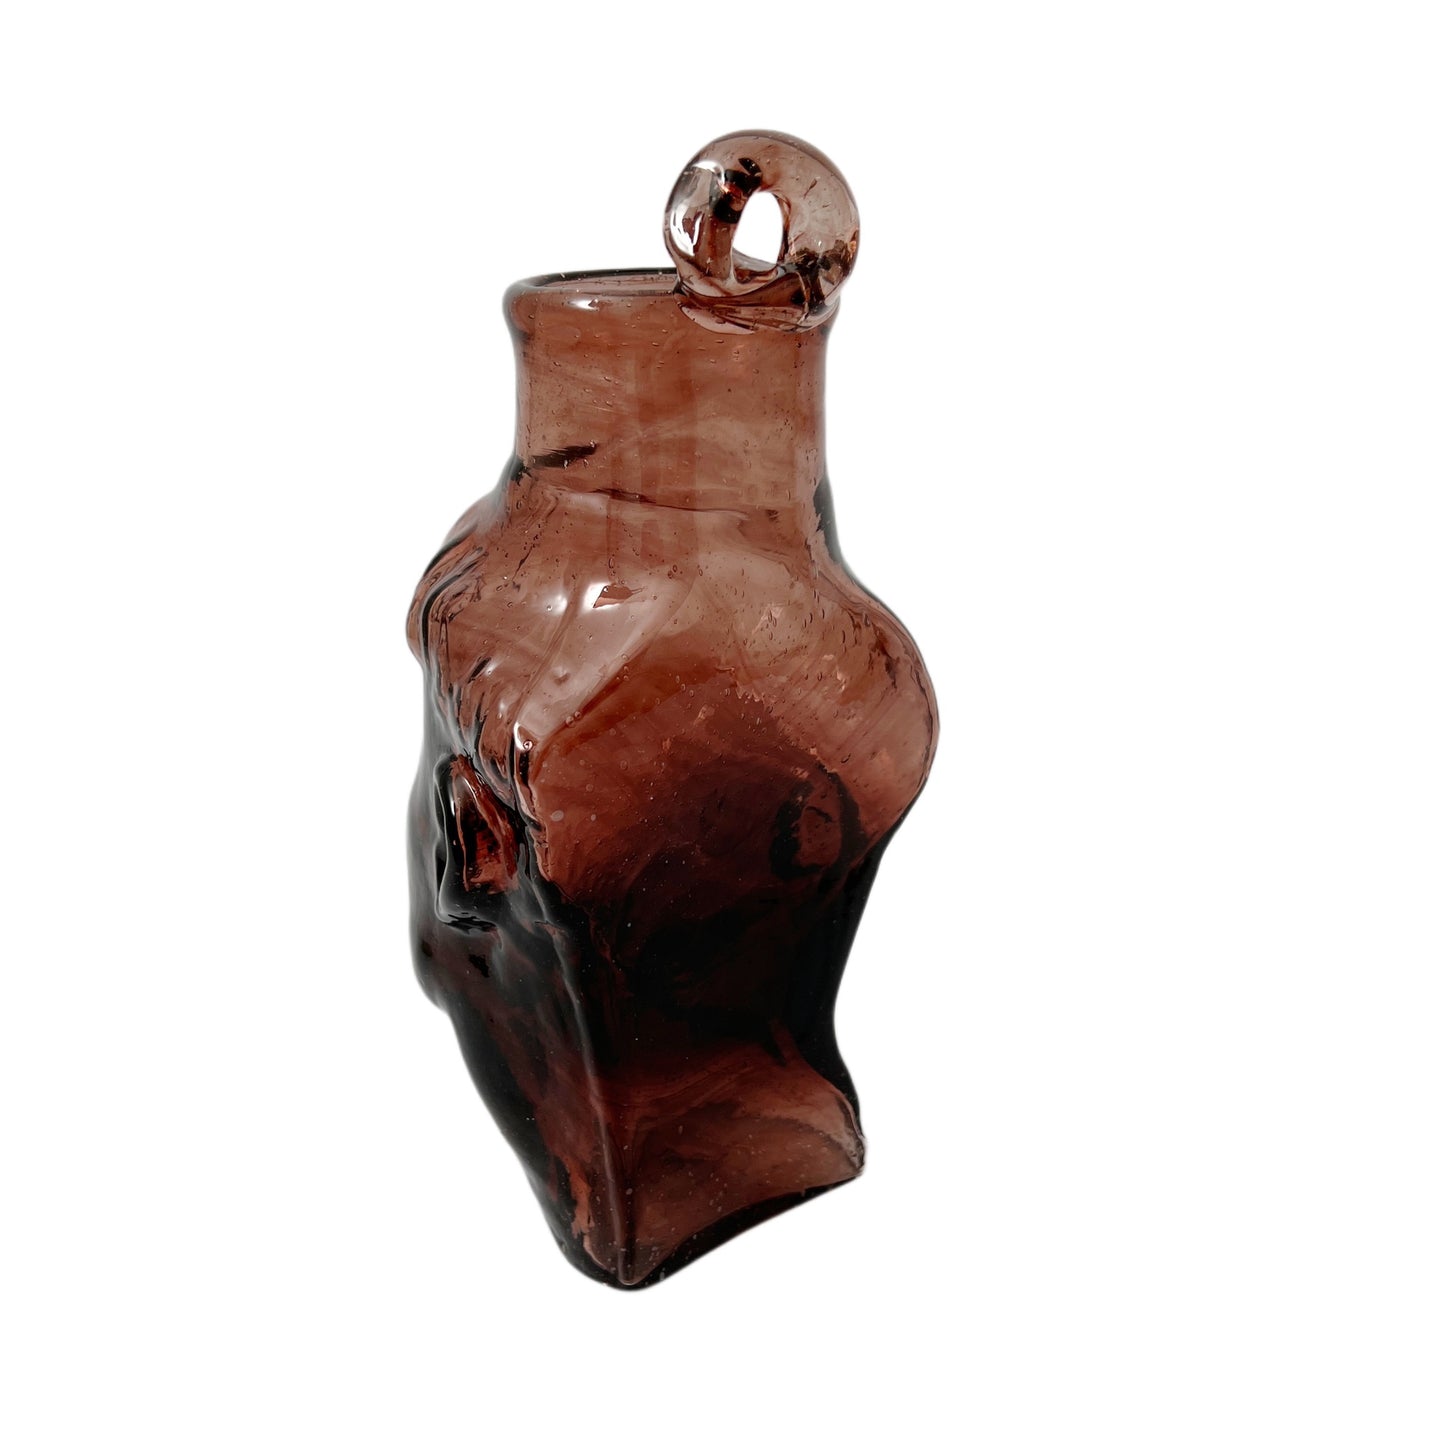 【La Soufflerie】フラワーベース Simon Wall-mounted Vase